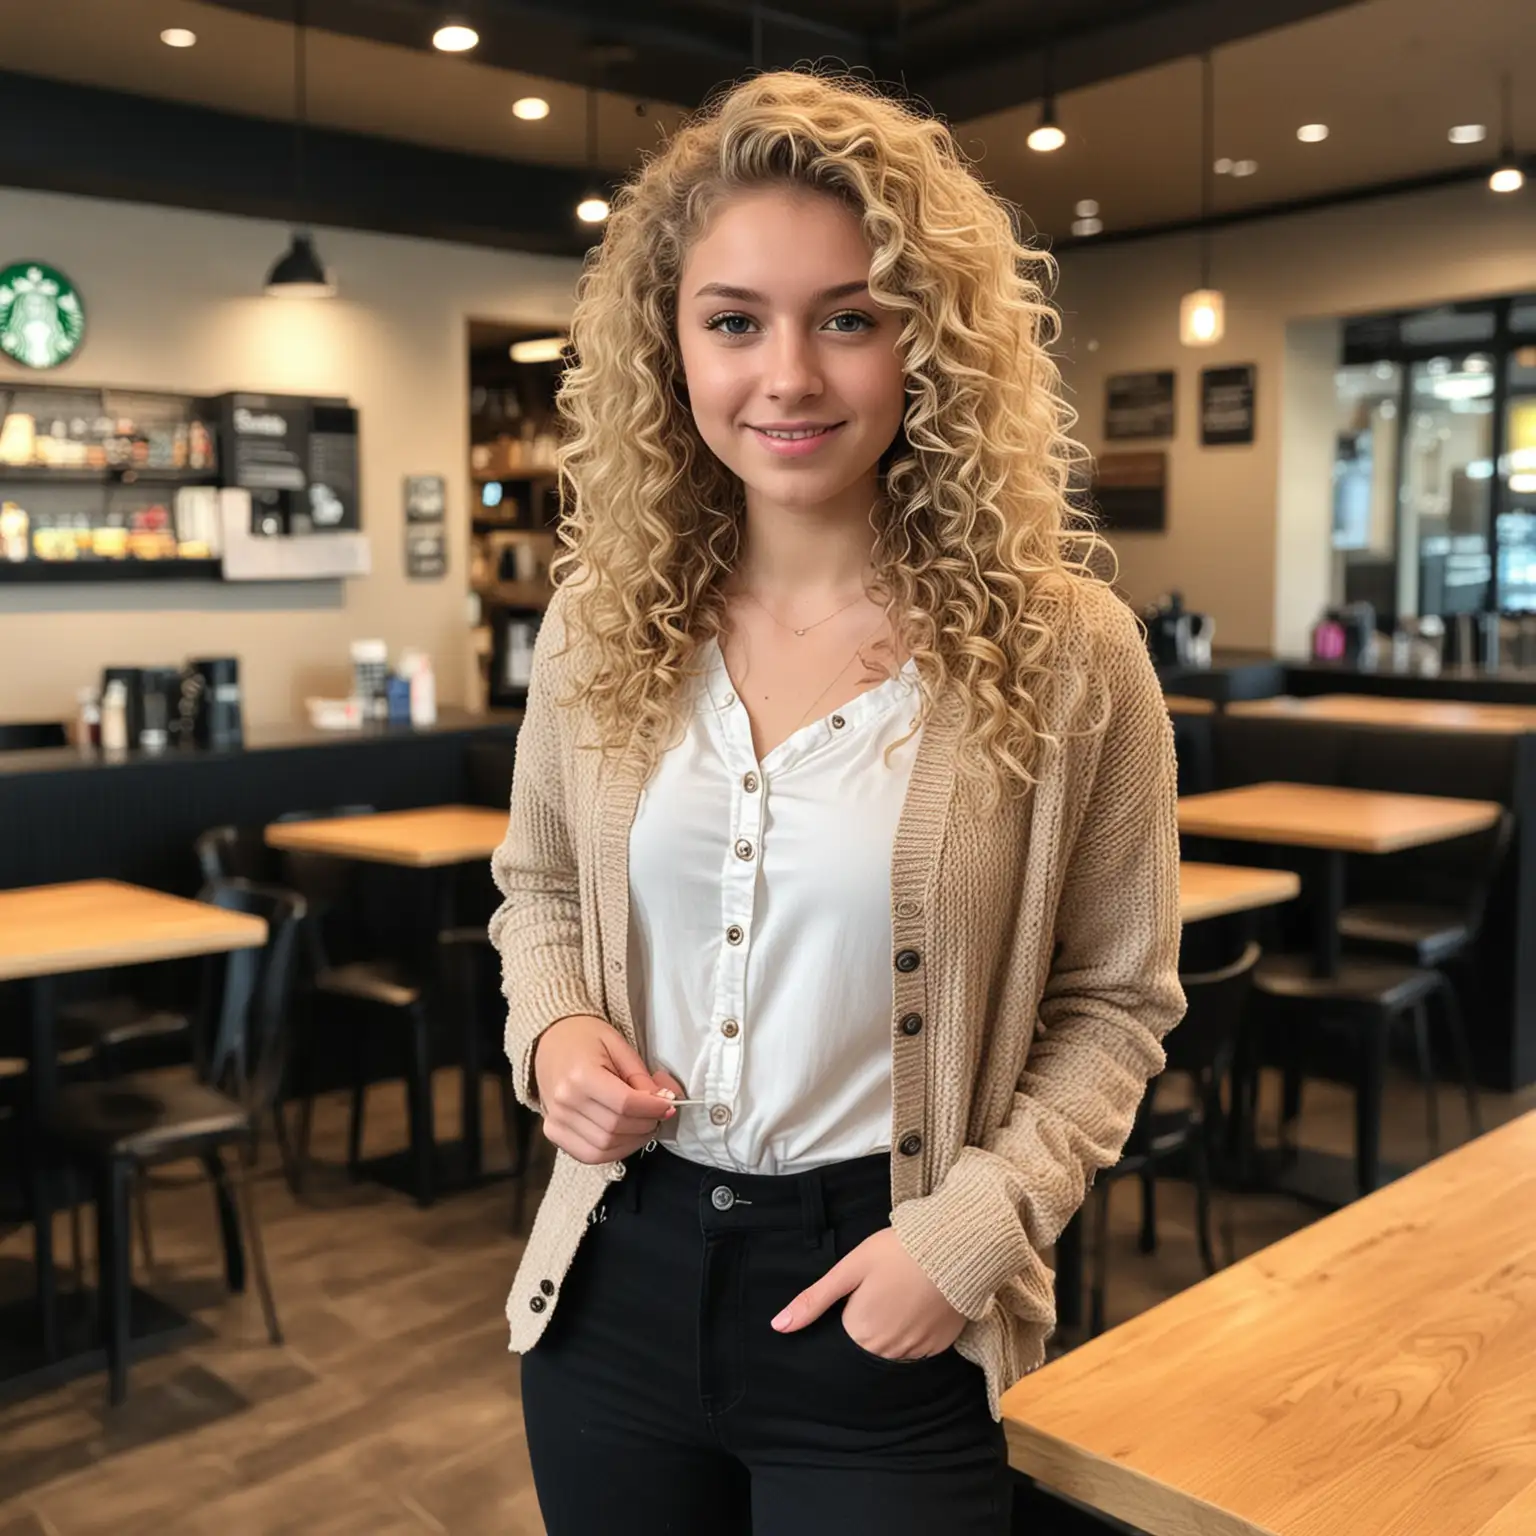 Teenage Girl in Stylish Attire for Starbucks Job Interview